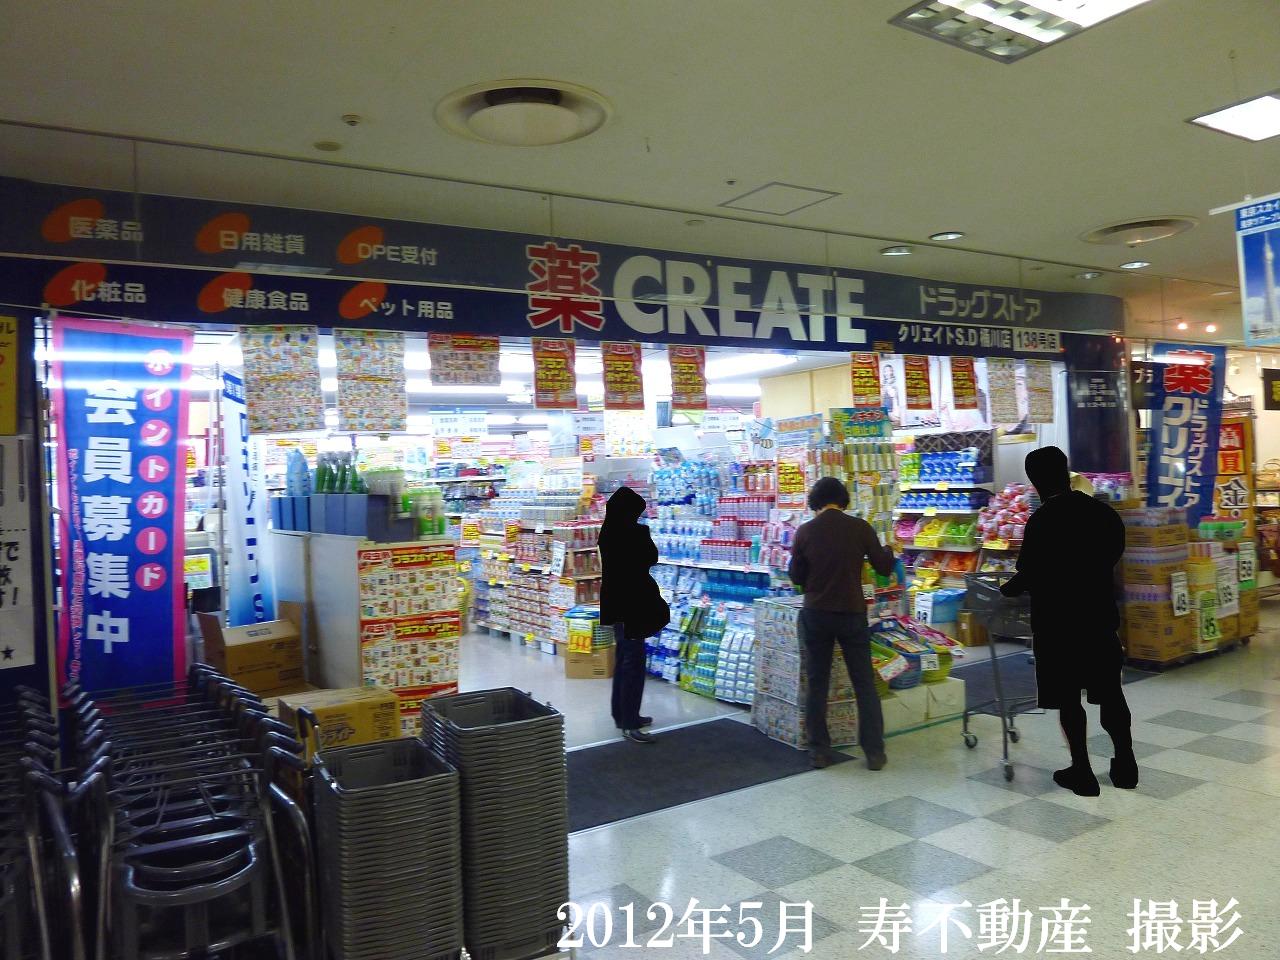 Dorakkusutoa. Create es ・ Dee Okegawa shop 789m until (drugstore)